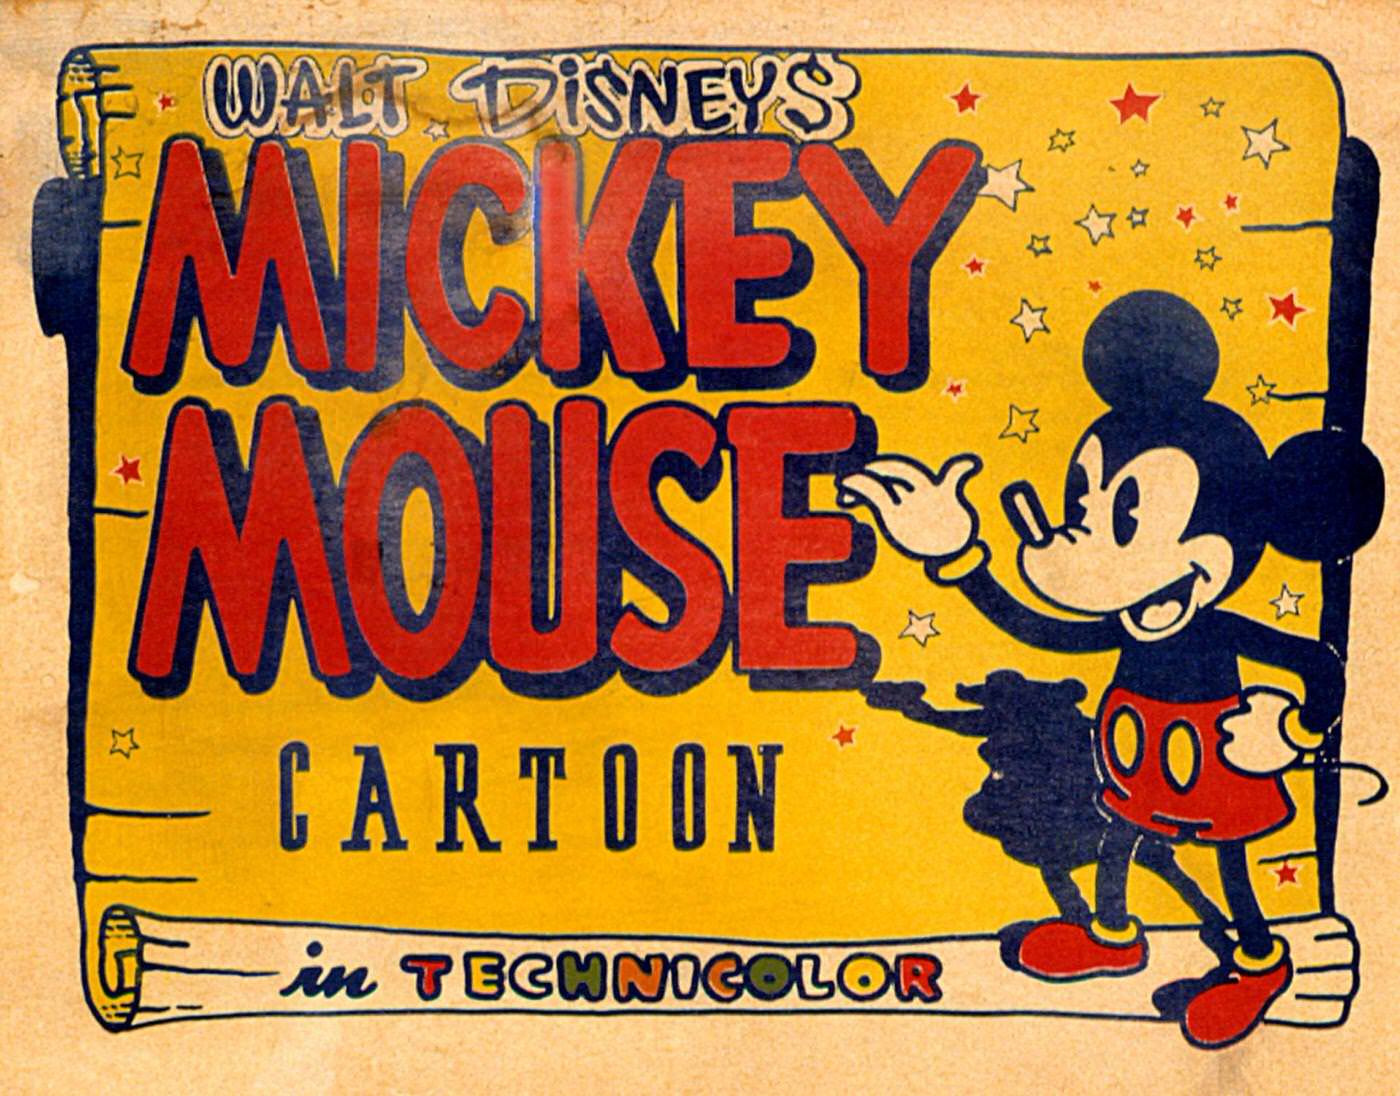 Mickey Mouse Cartoons, lobbycard, Disney animation, 1933.